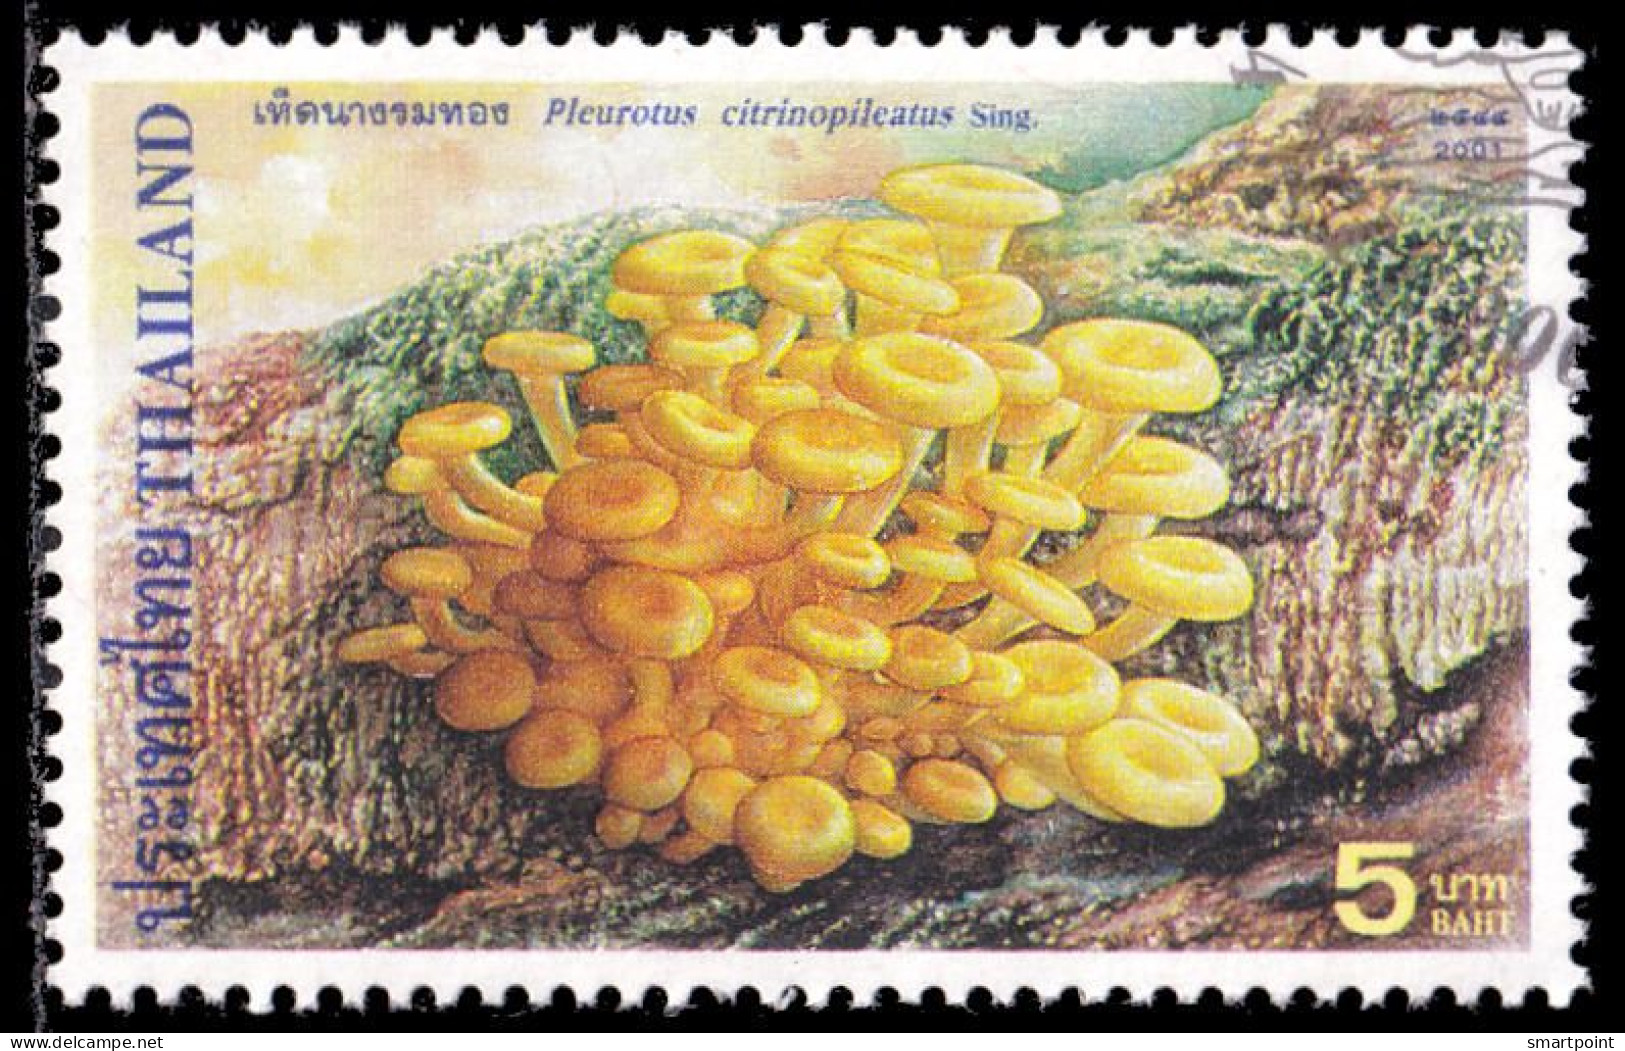 Thailand Stamp 2001 Mushrooms (3rd Series) 5 Baht - Used - Thailand